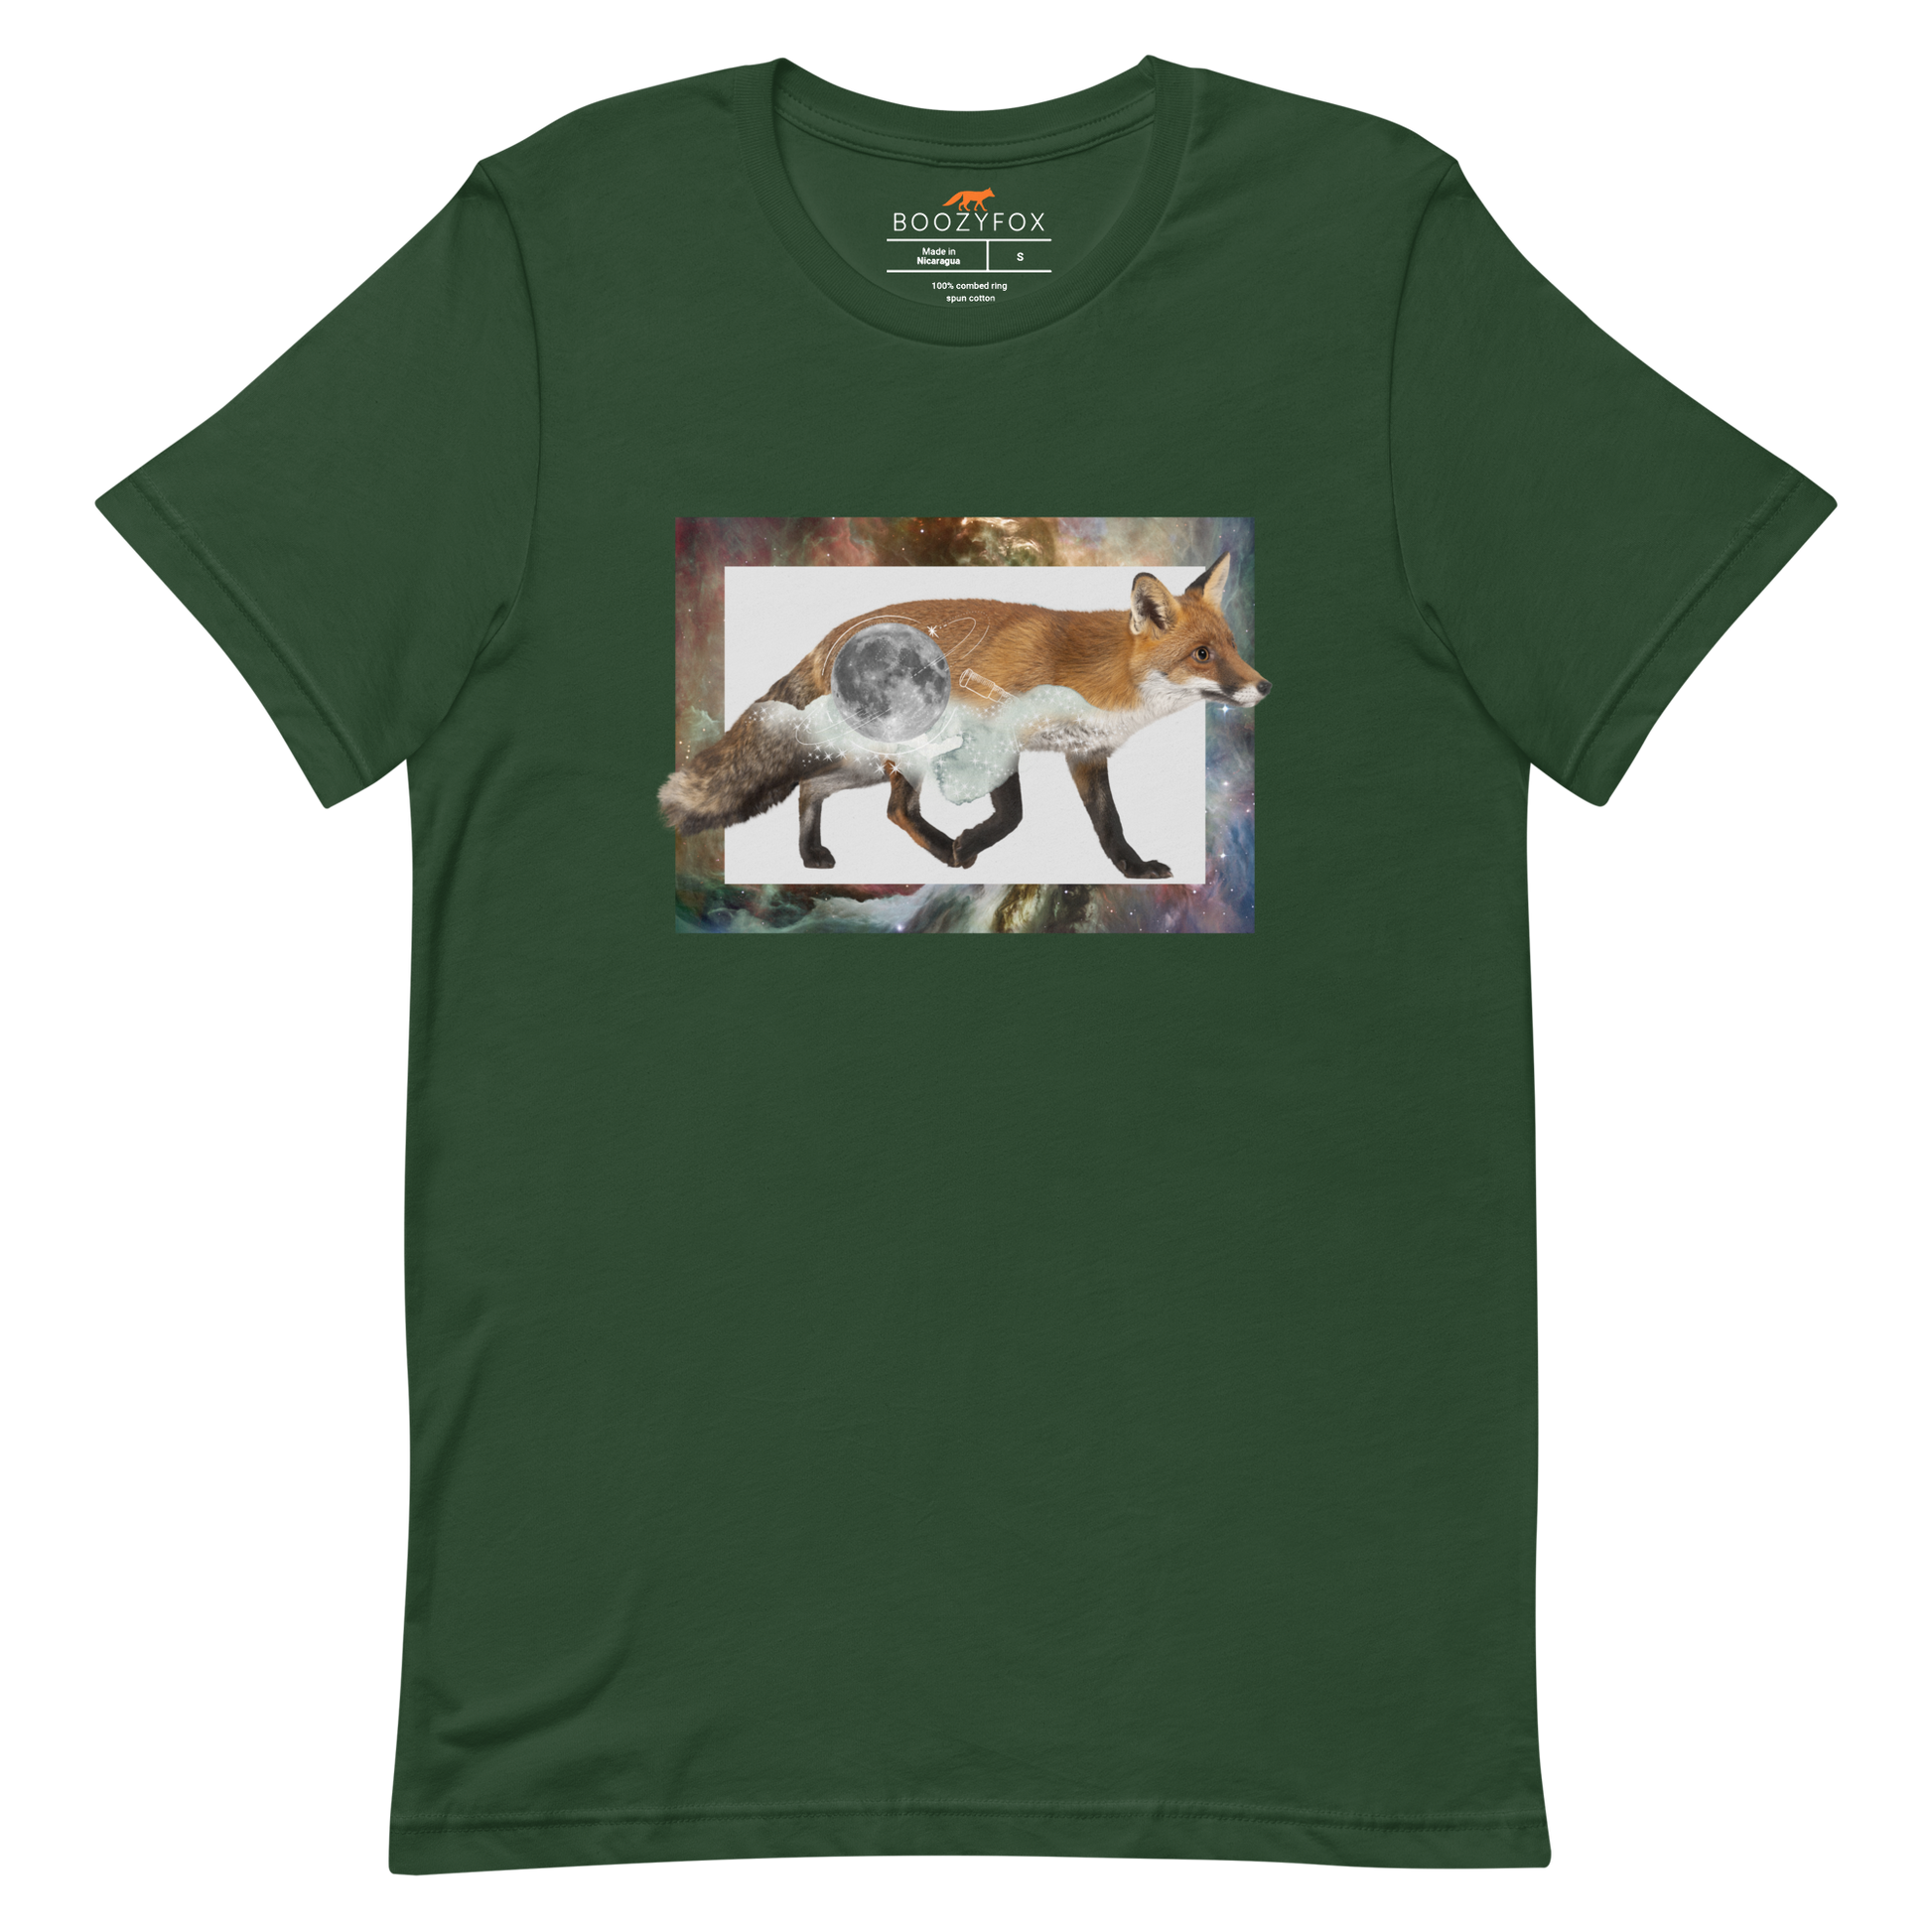 Forest Green Premium Fox T-Shirt featuring a stellar Space Fox graphic on the chest - Cool Graphic Fox Tees - Boozy Fox